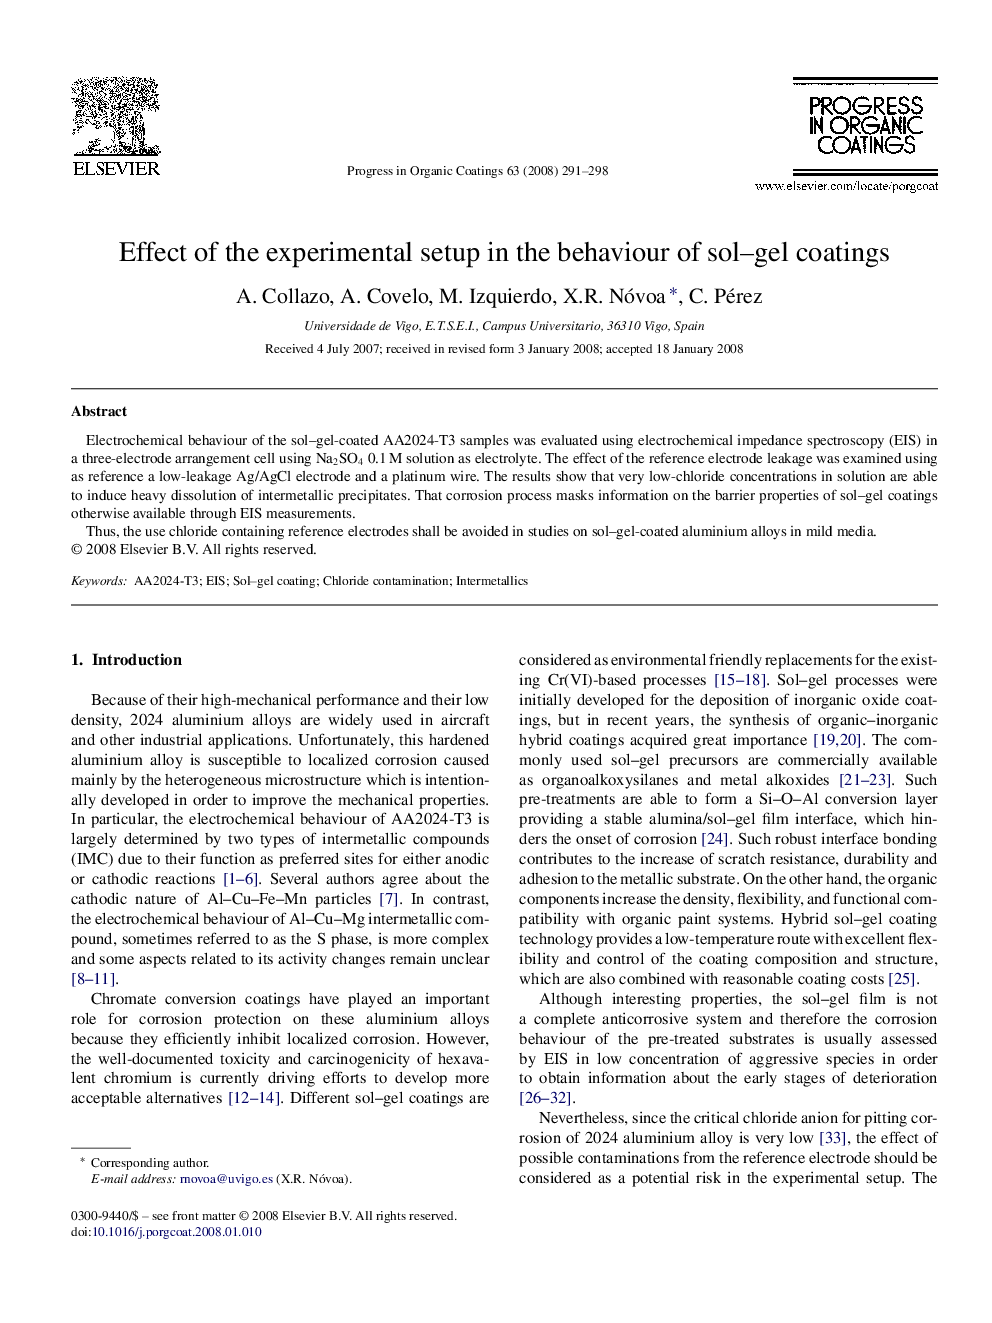 Effect of the experimental setup in the behaviour of sol-gel coatings